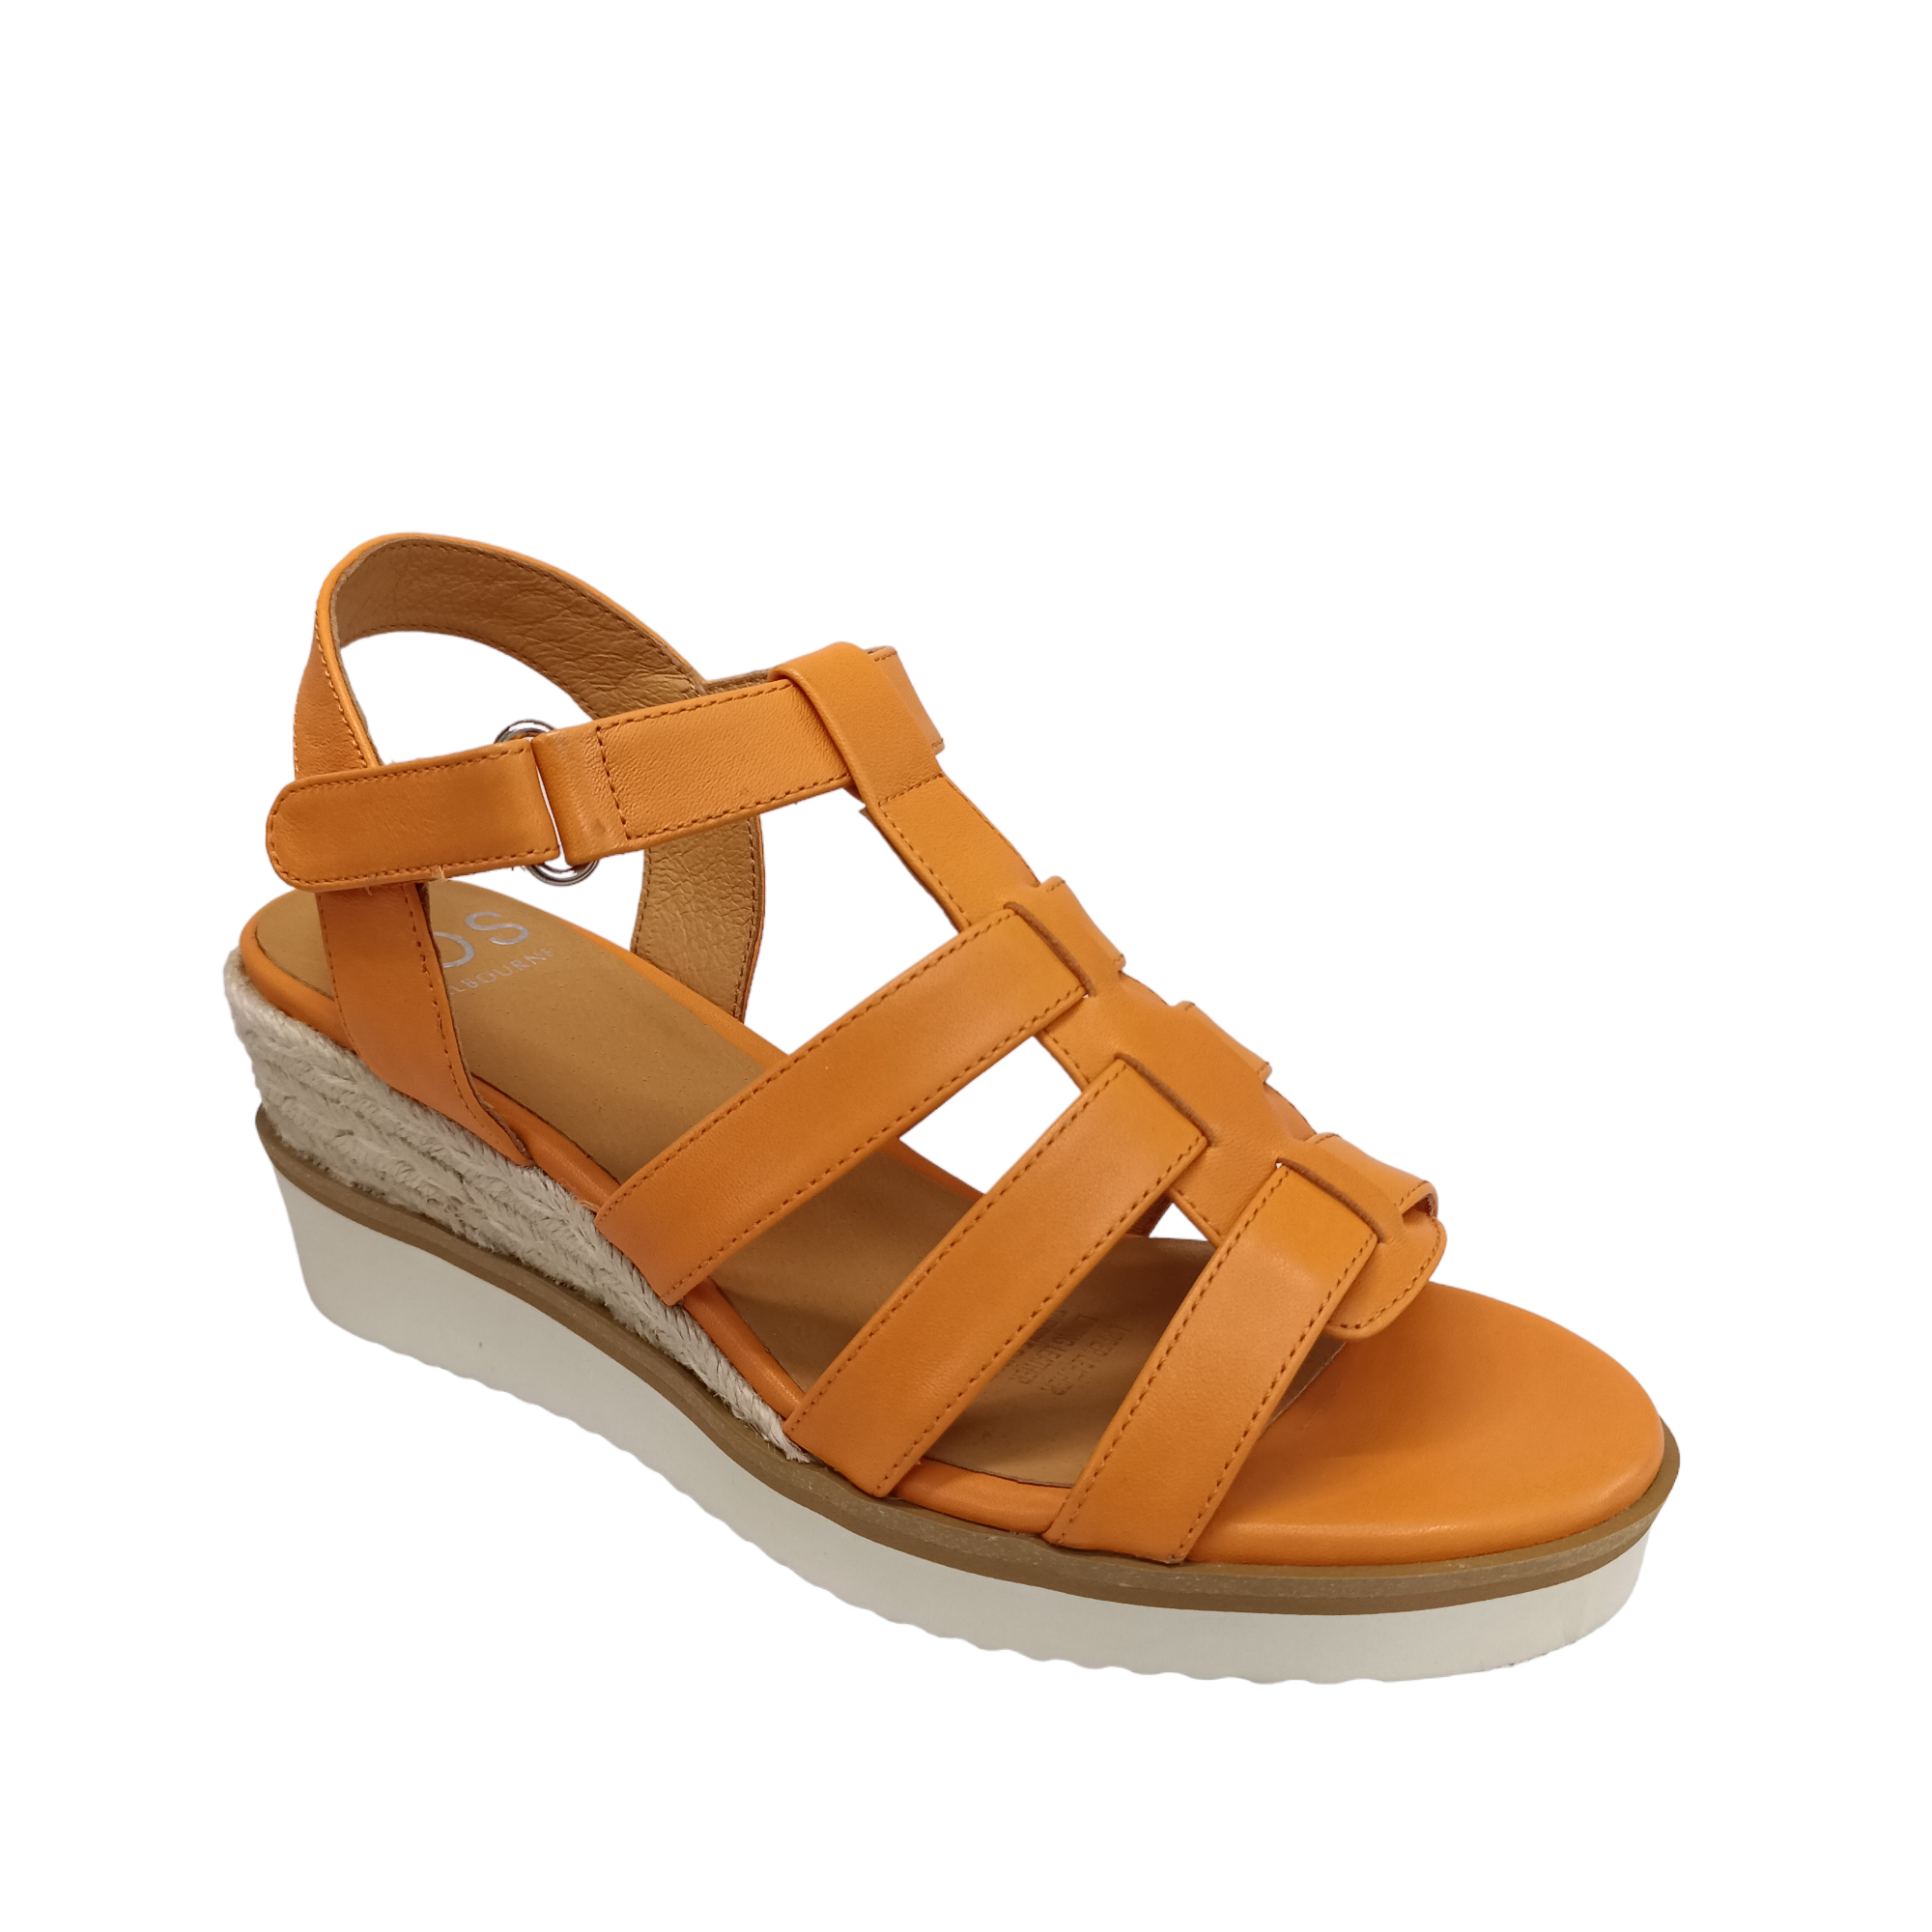 Lana - shoe&me - EOS - Sandal - Sandals, Summer, Wedges, Womens